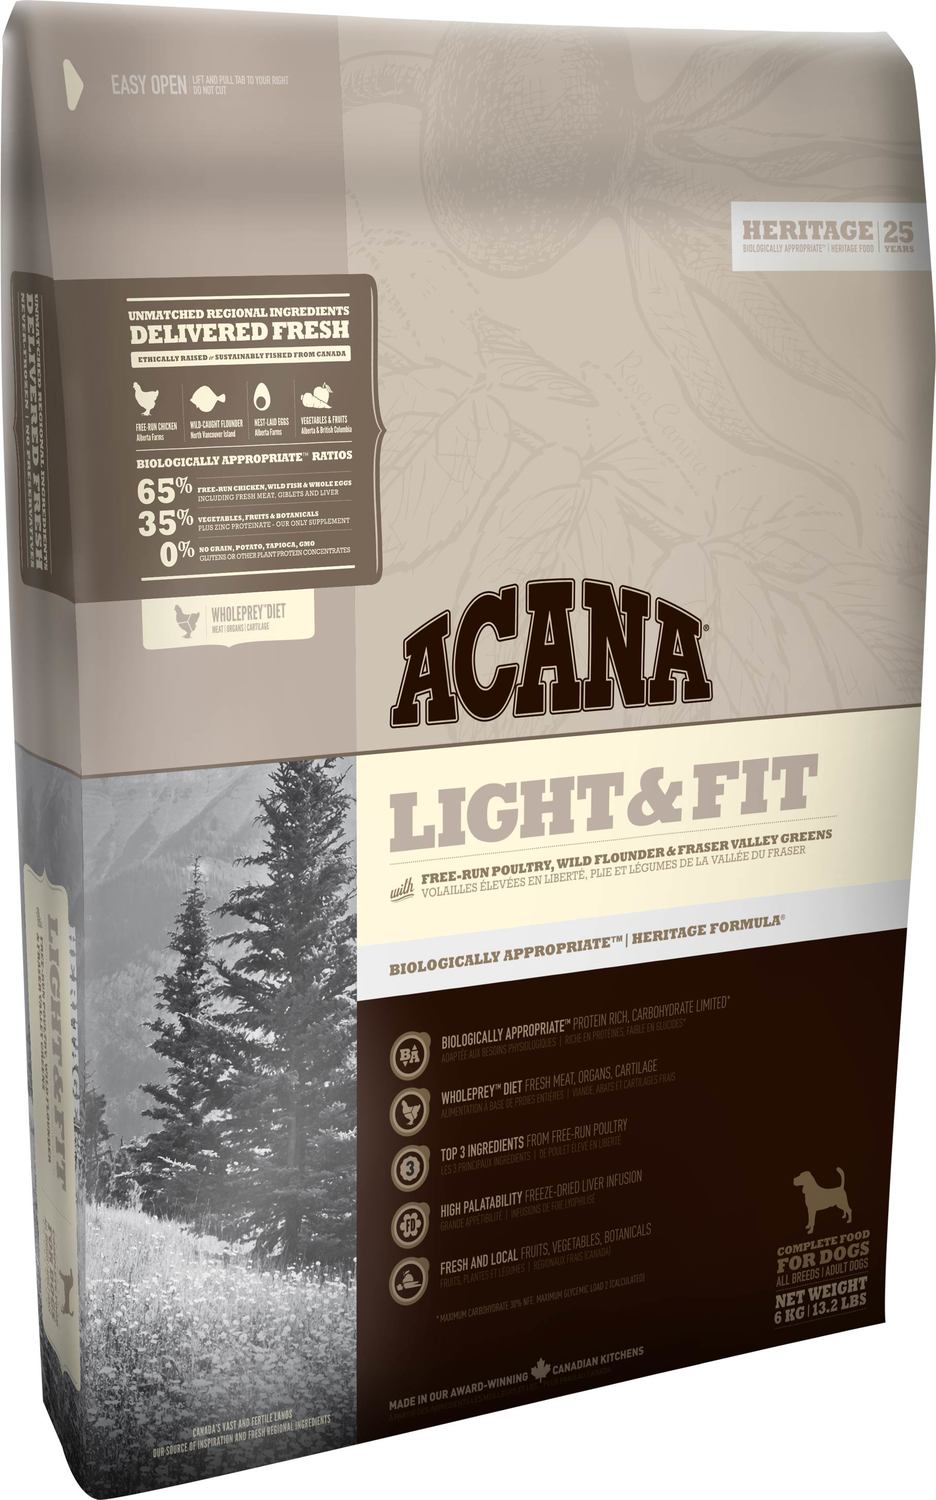 Acana Light & Fit - zoom